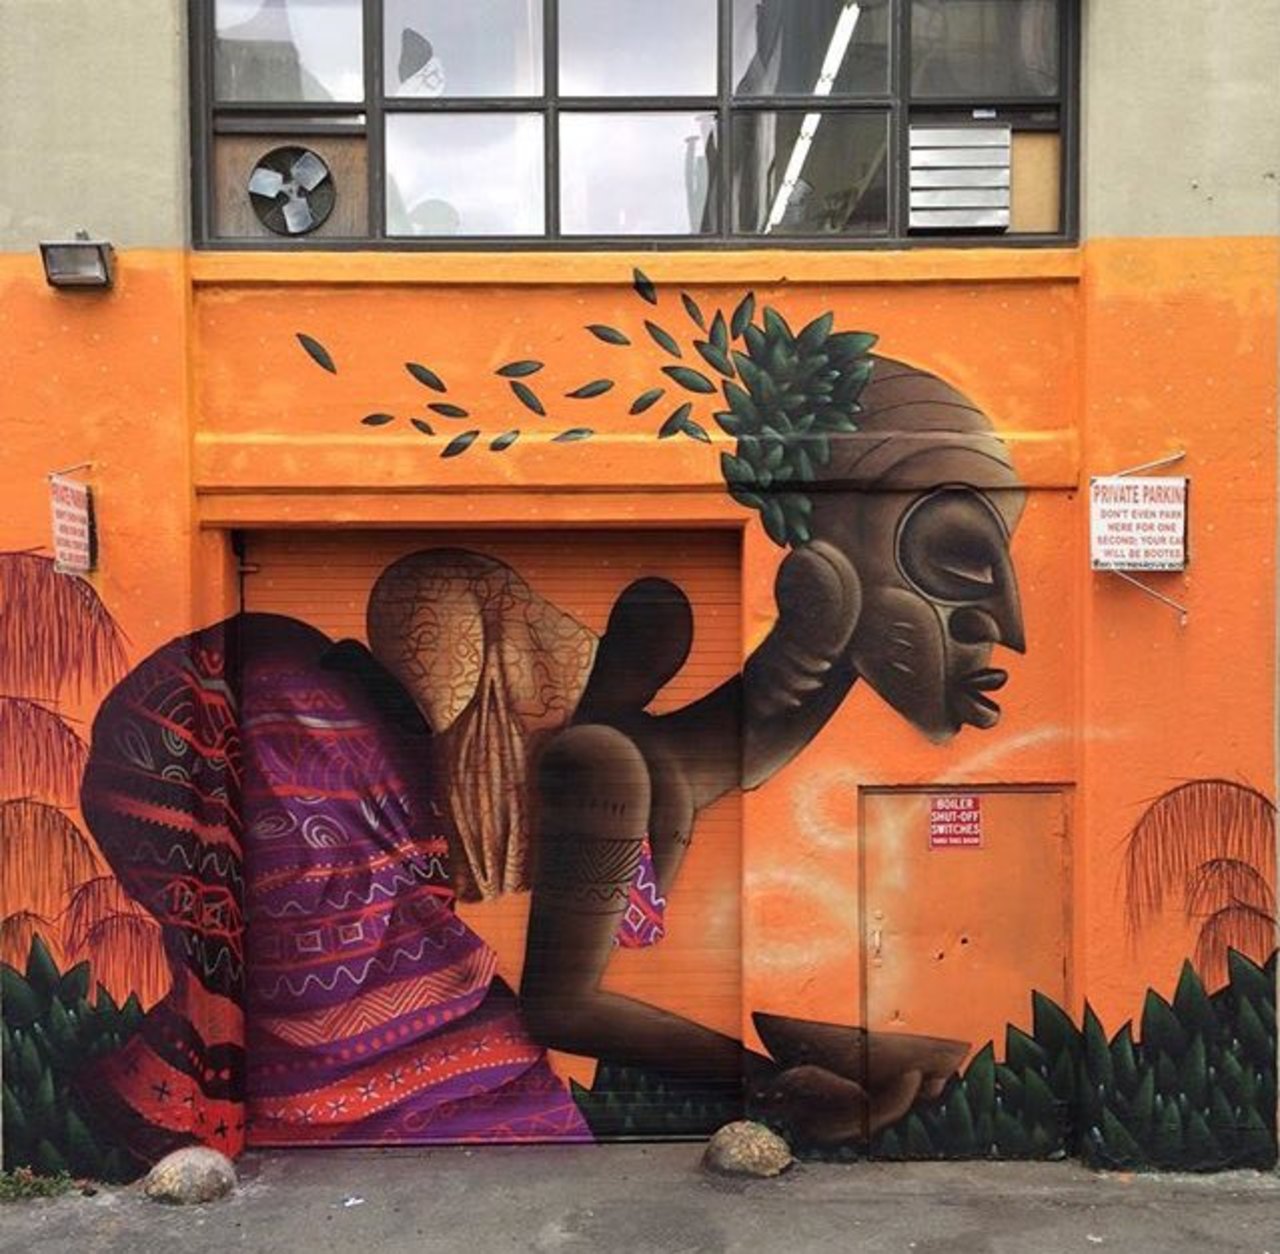 New Street Art by Alexandre Keto in NYC 

#art #graffiti #mural #streetart https://t.co/M99aAzqWSb